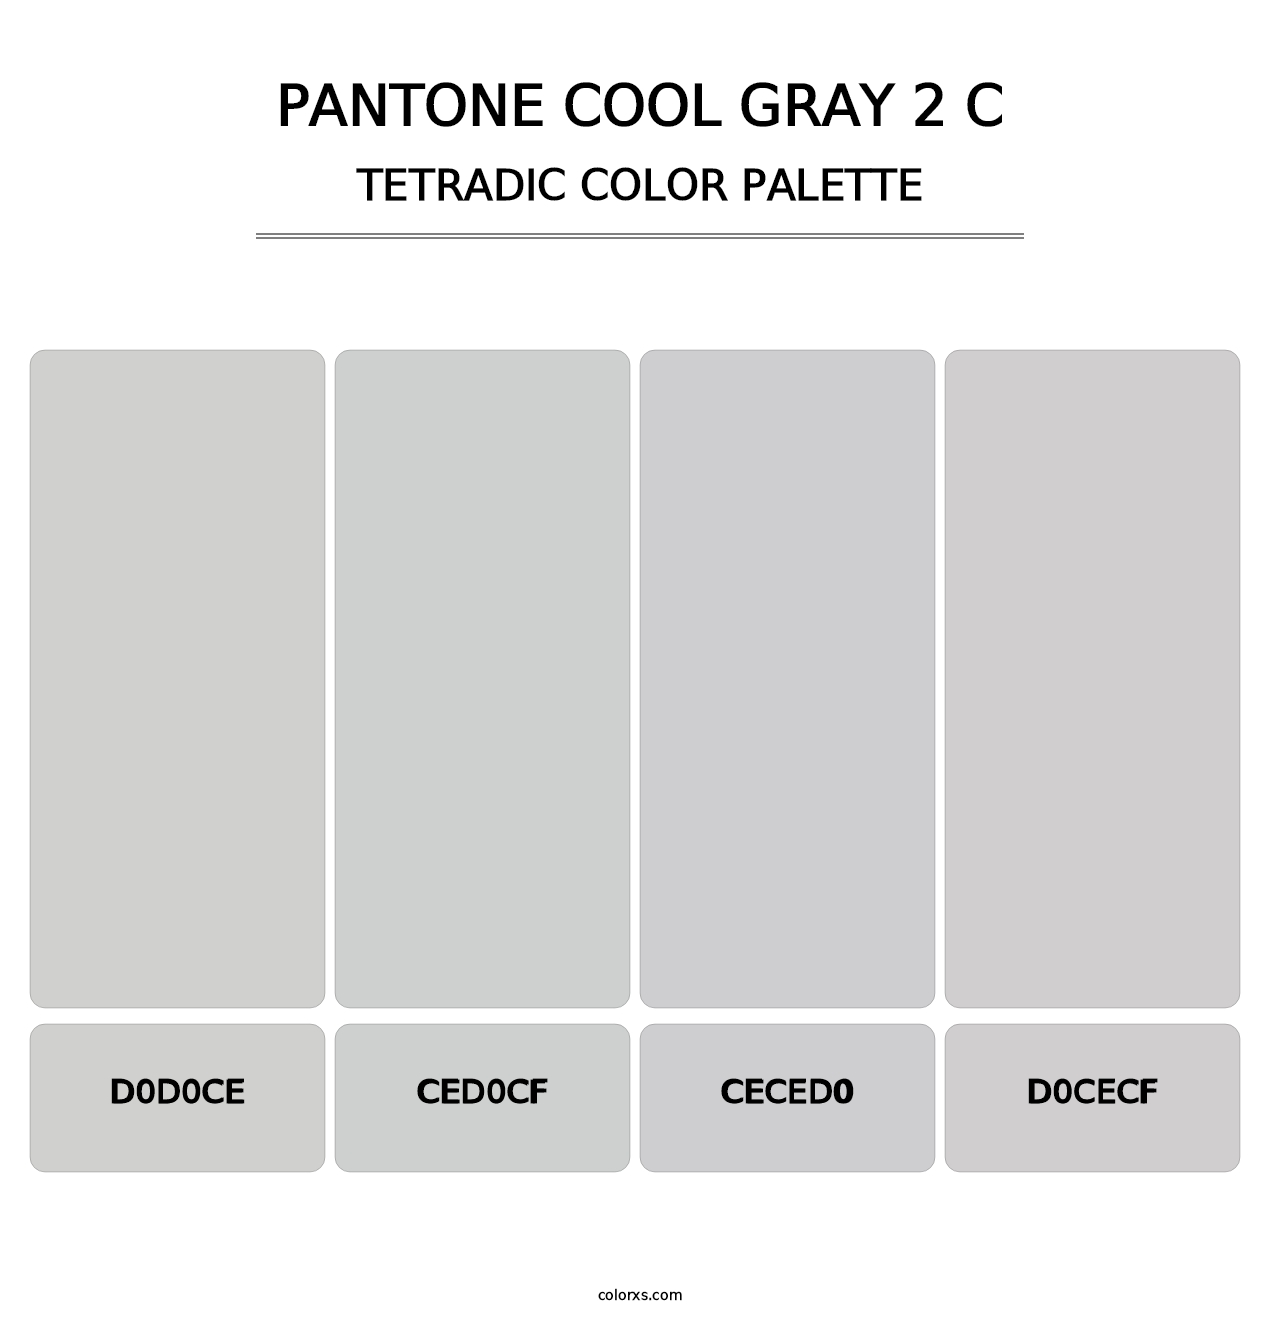 PANTONE Cool Gray 2 C - Tetradic Color Palette